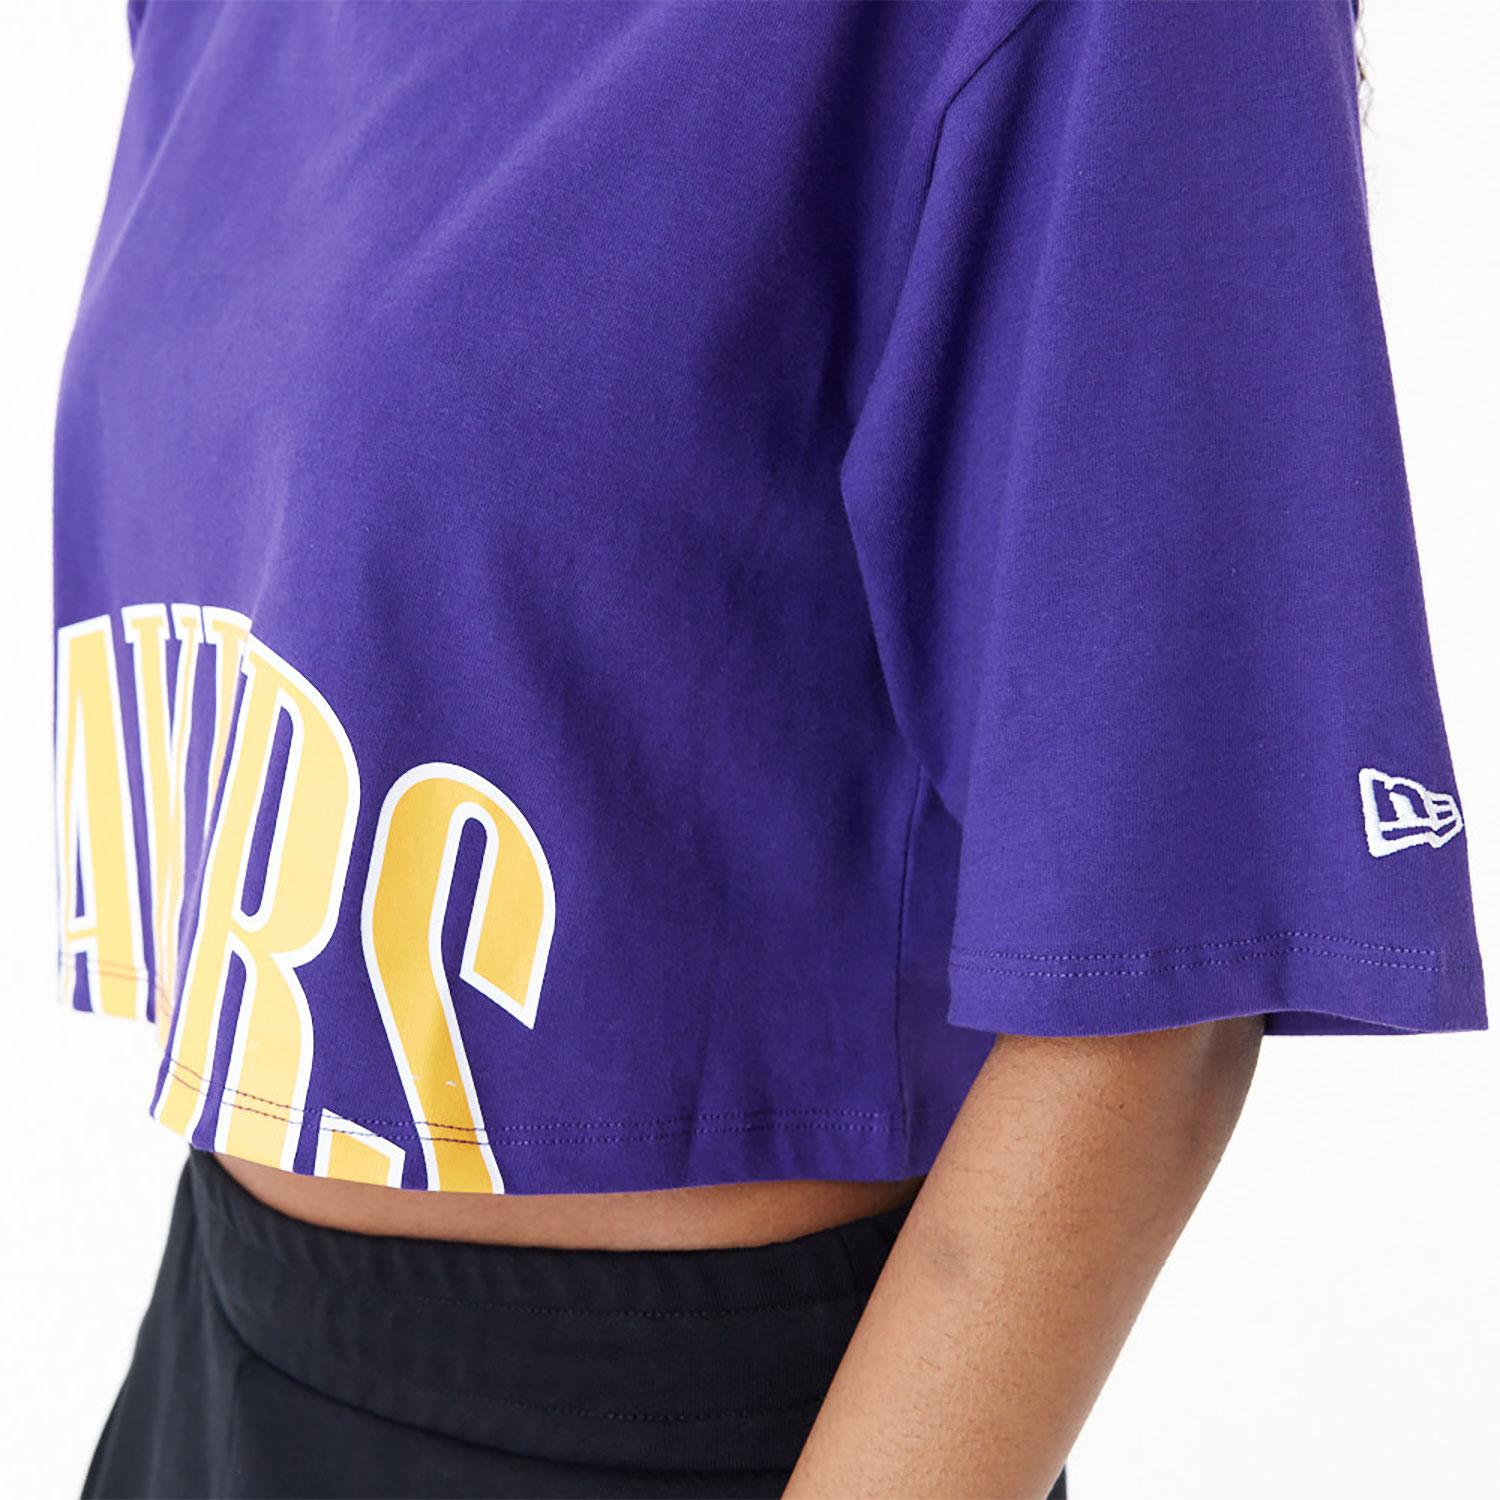 NEW LA Lakers Shirt Womens Medium Purple Halter Top Klutch Basketball NBA